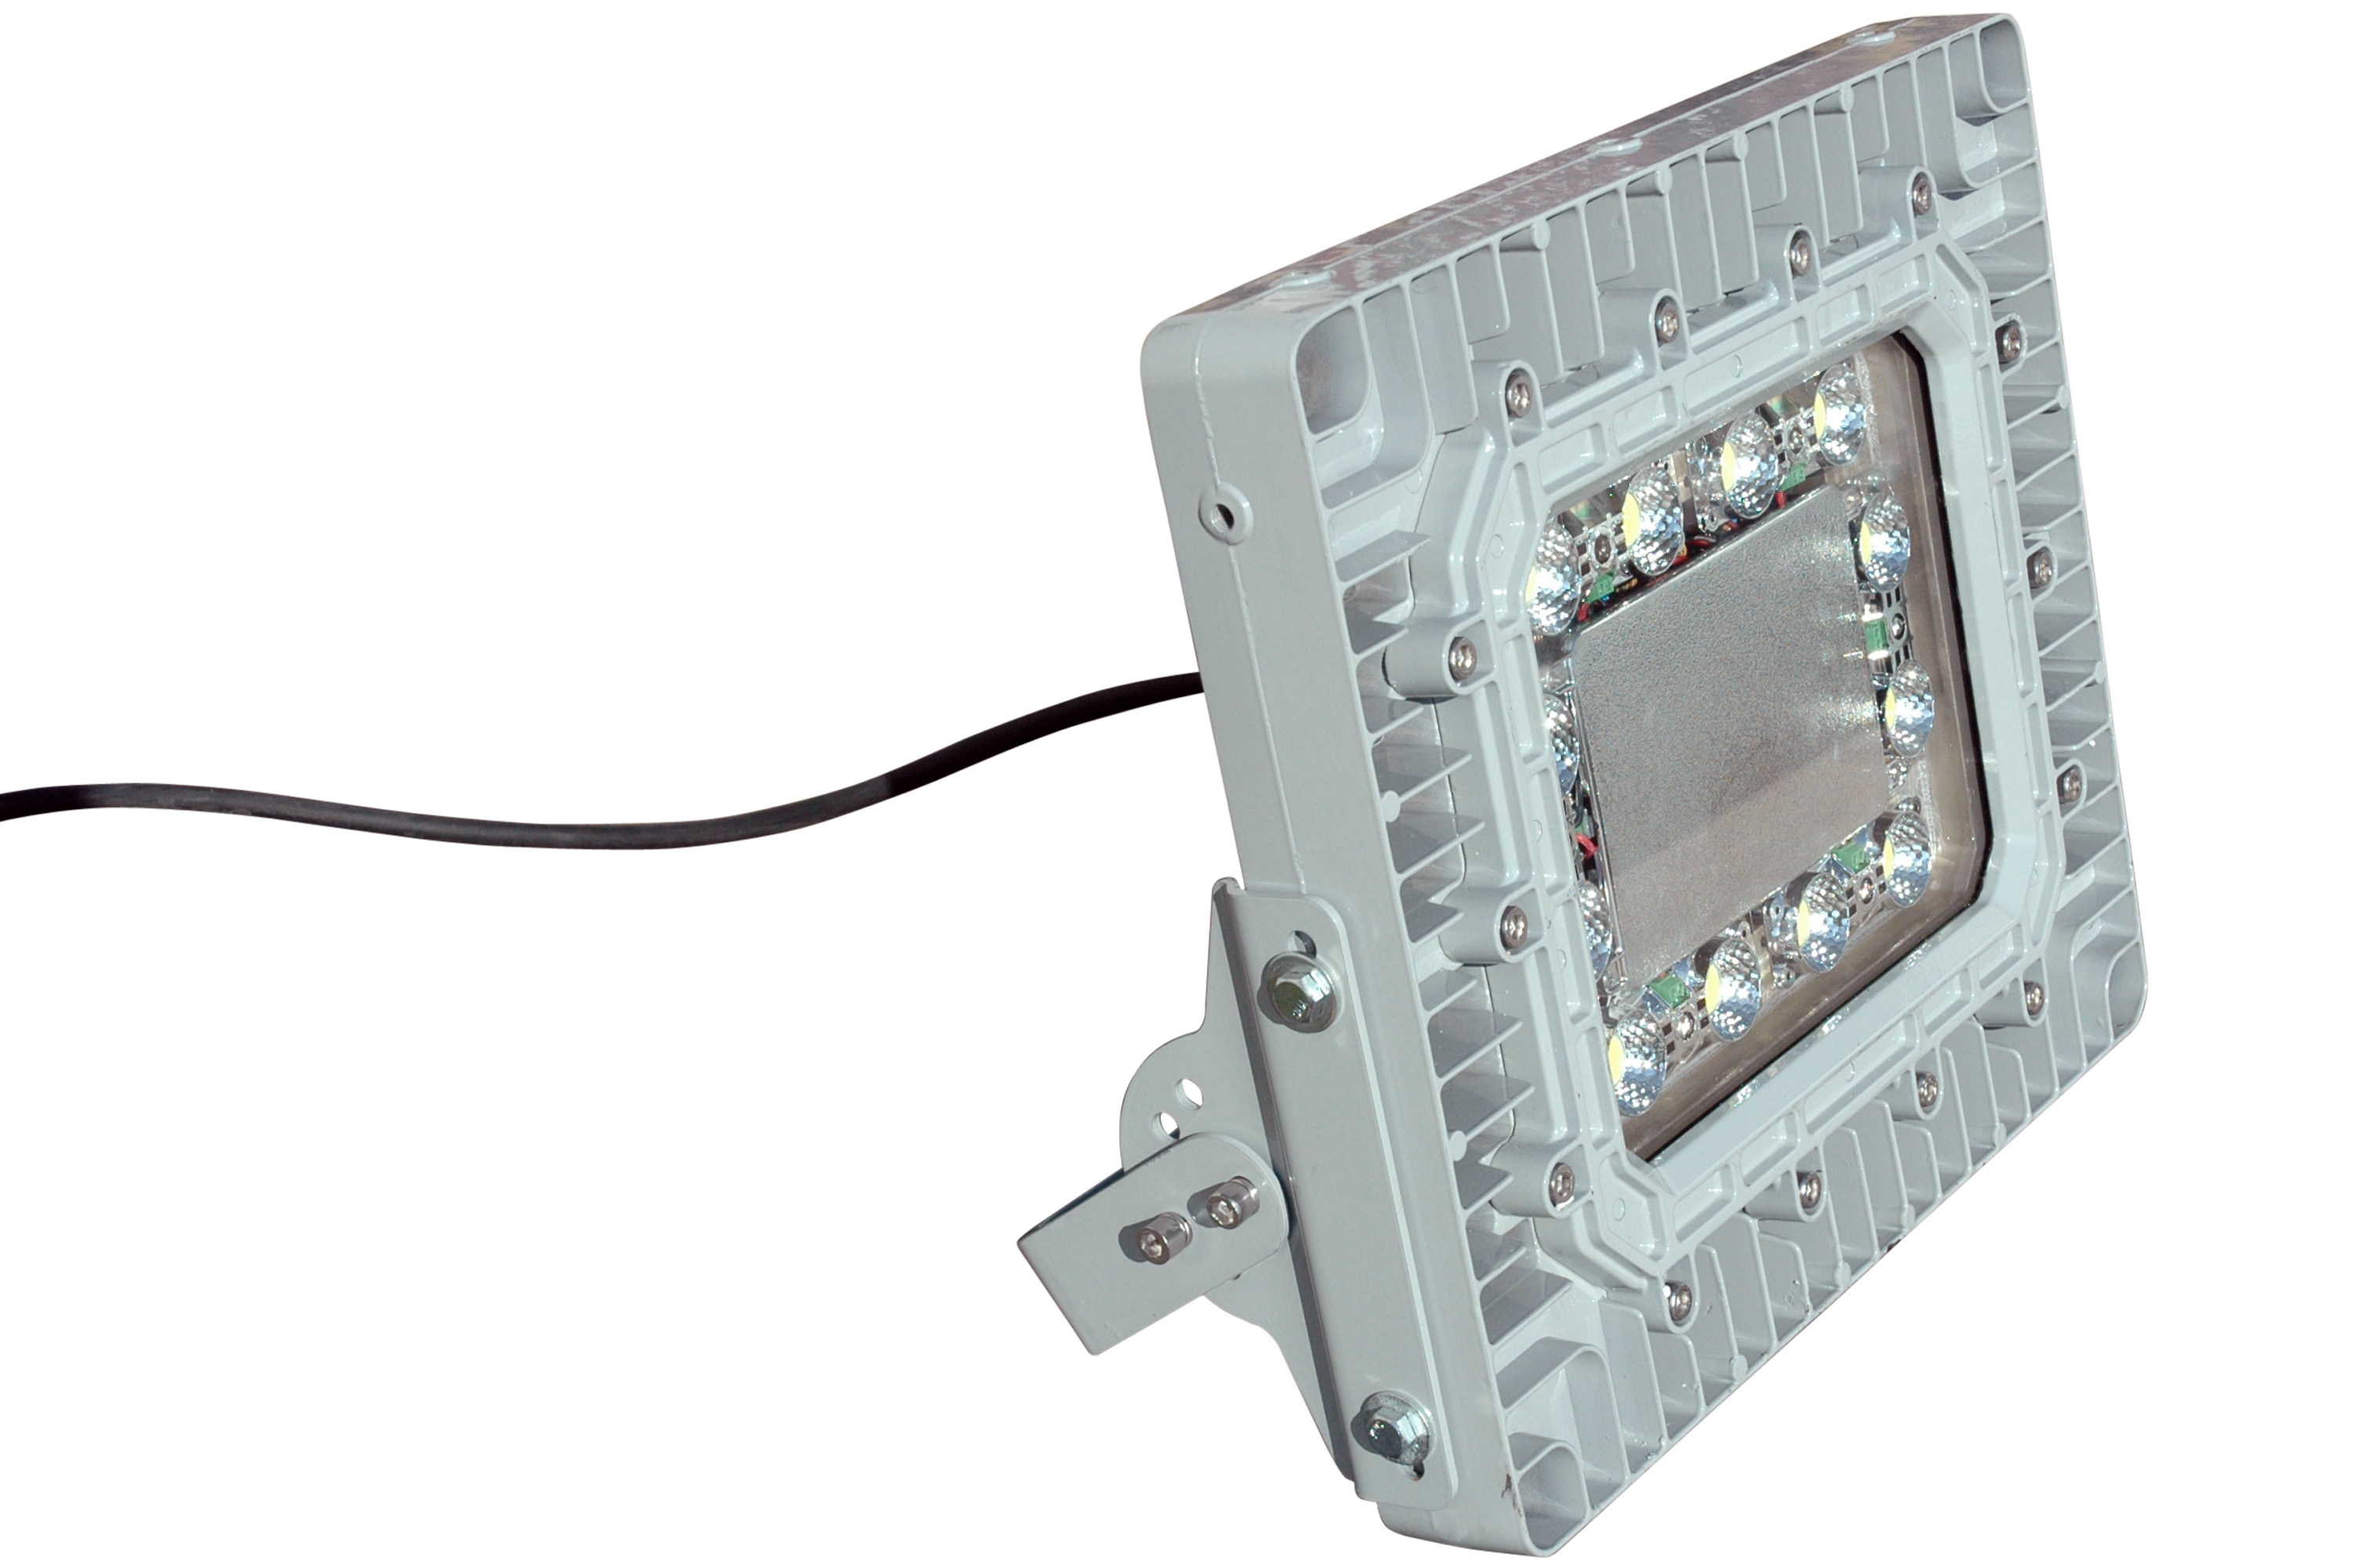 Class 2 Division 1 150 Watt LED Light Fixture that operates on 347/480VAC